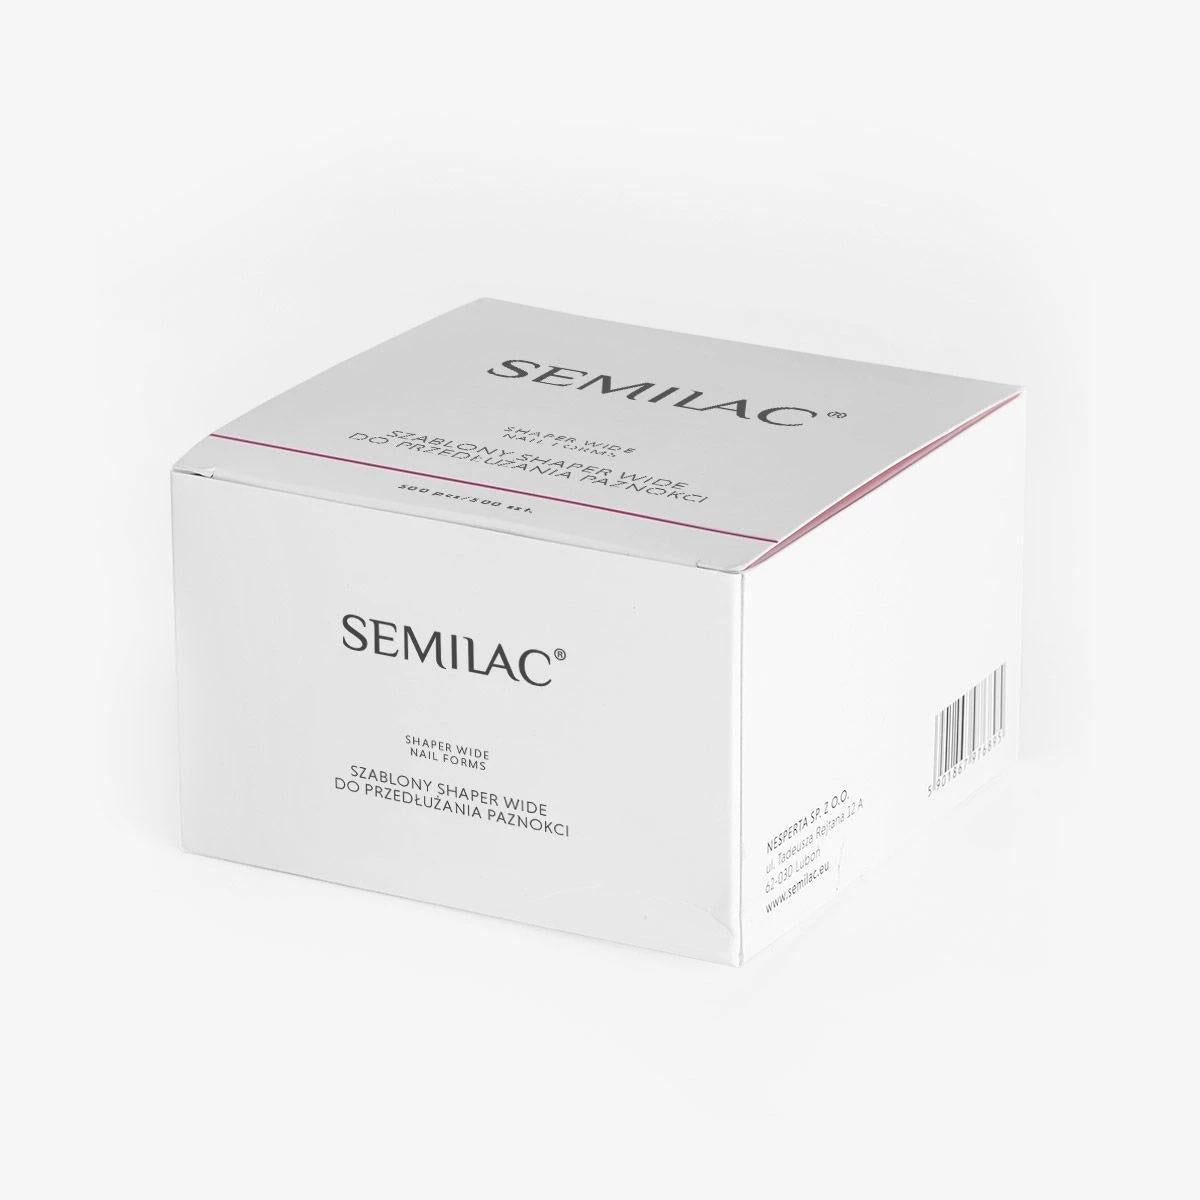 Semilac Shaper Wide Nail Forms 500 psc - Semilac UK